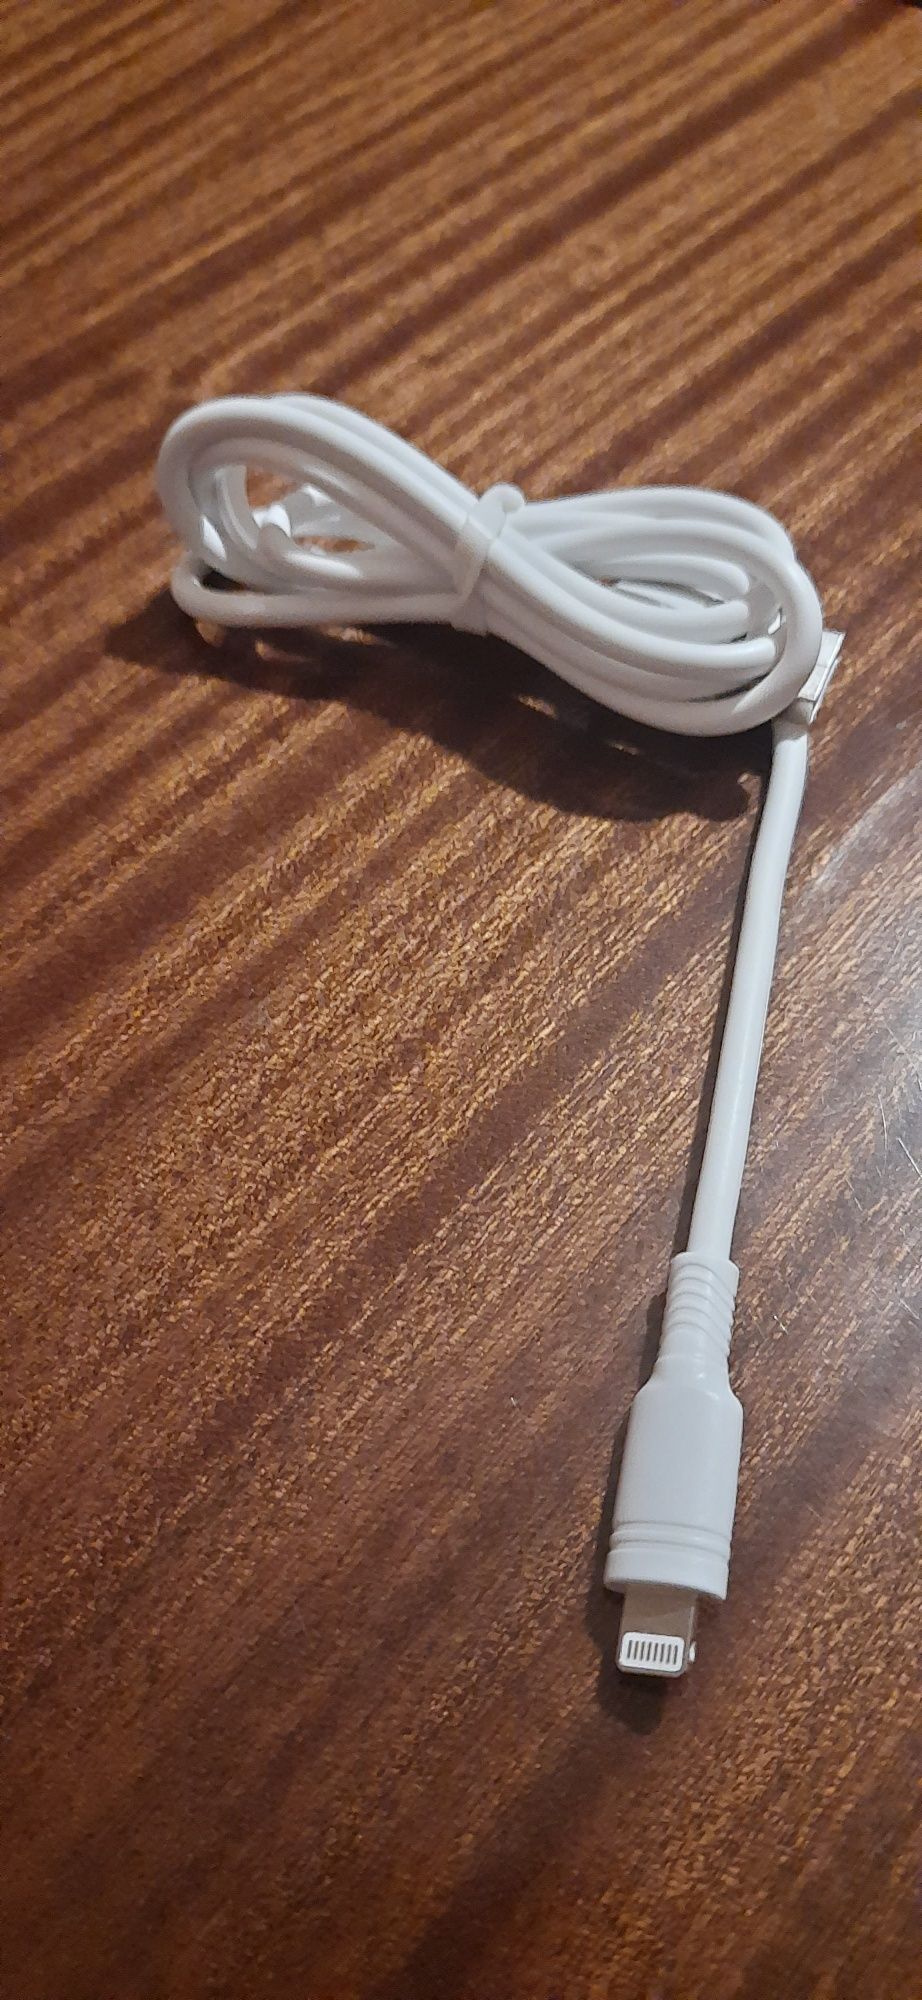 IPhone Kabel apple do USB typ A do ładowania lightning